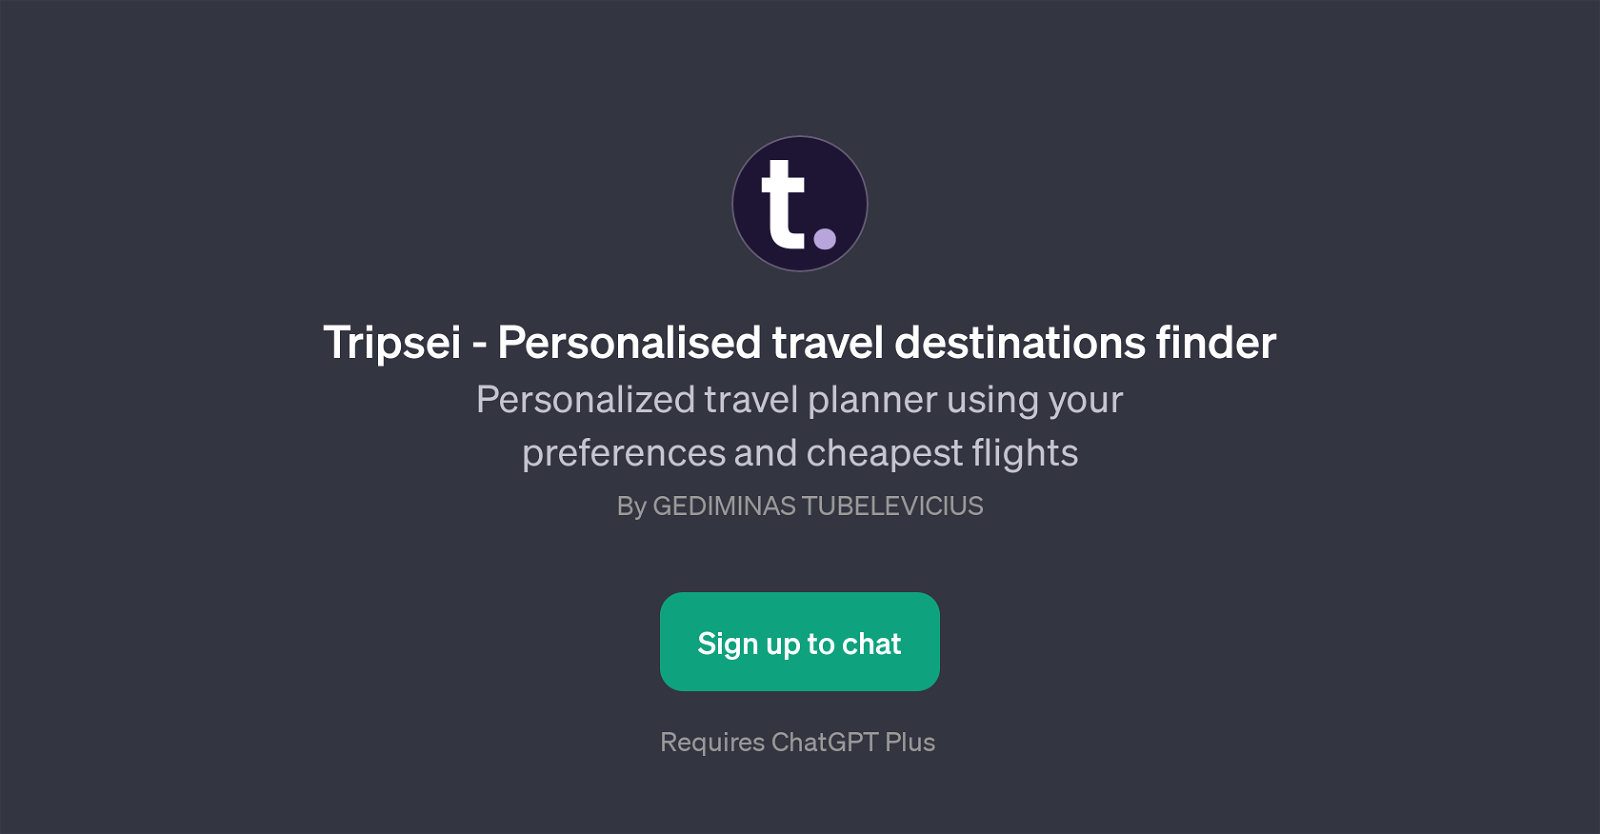 Tripsei - Personalised travel destinations finder website